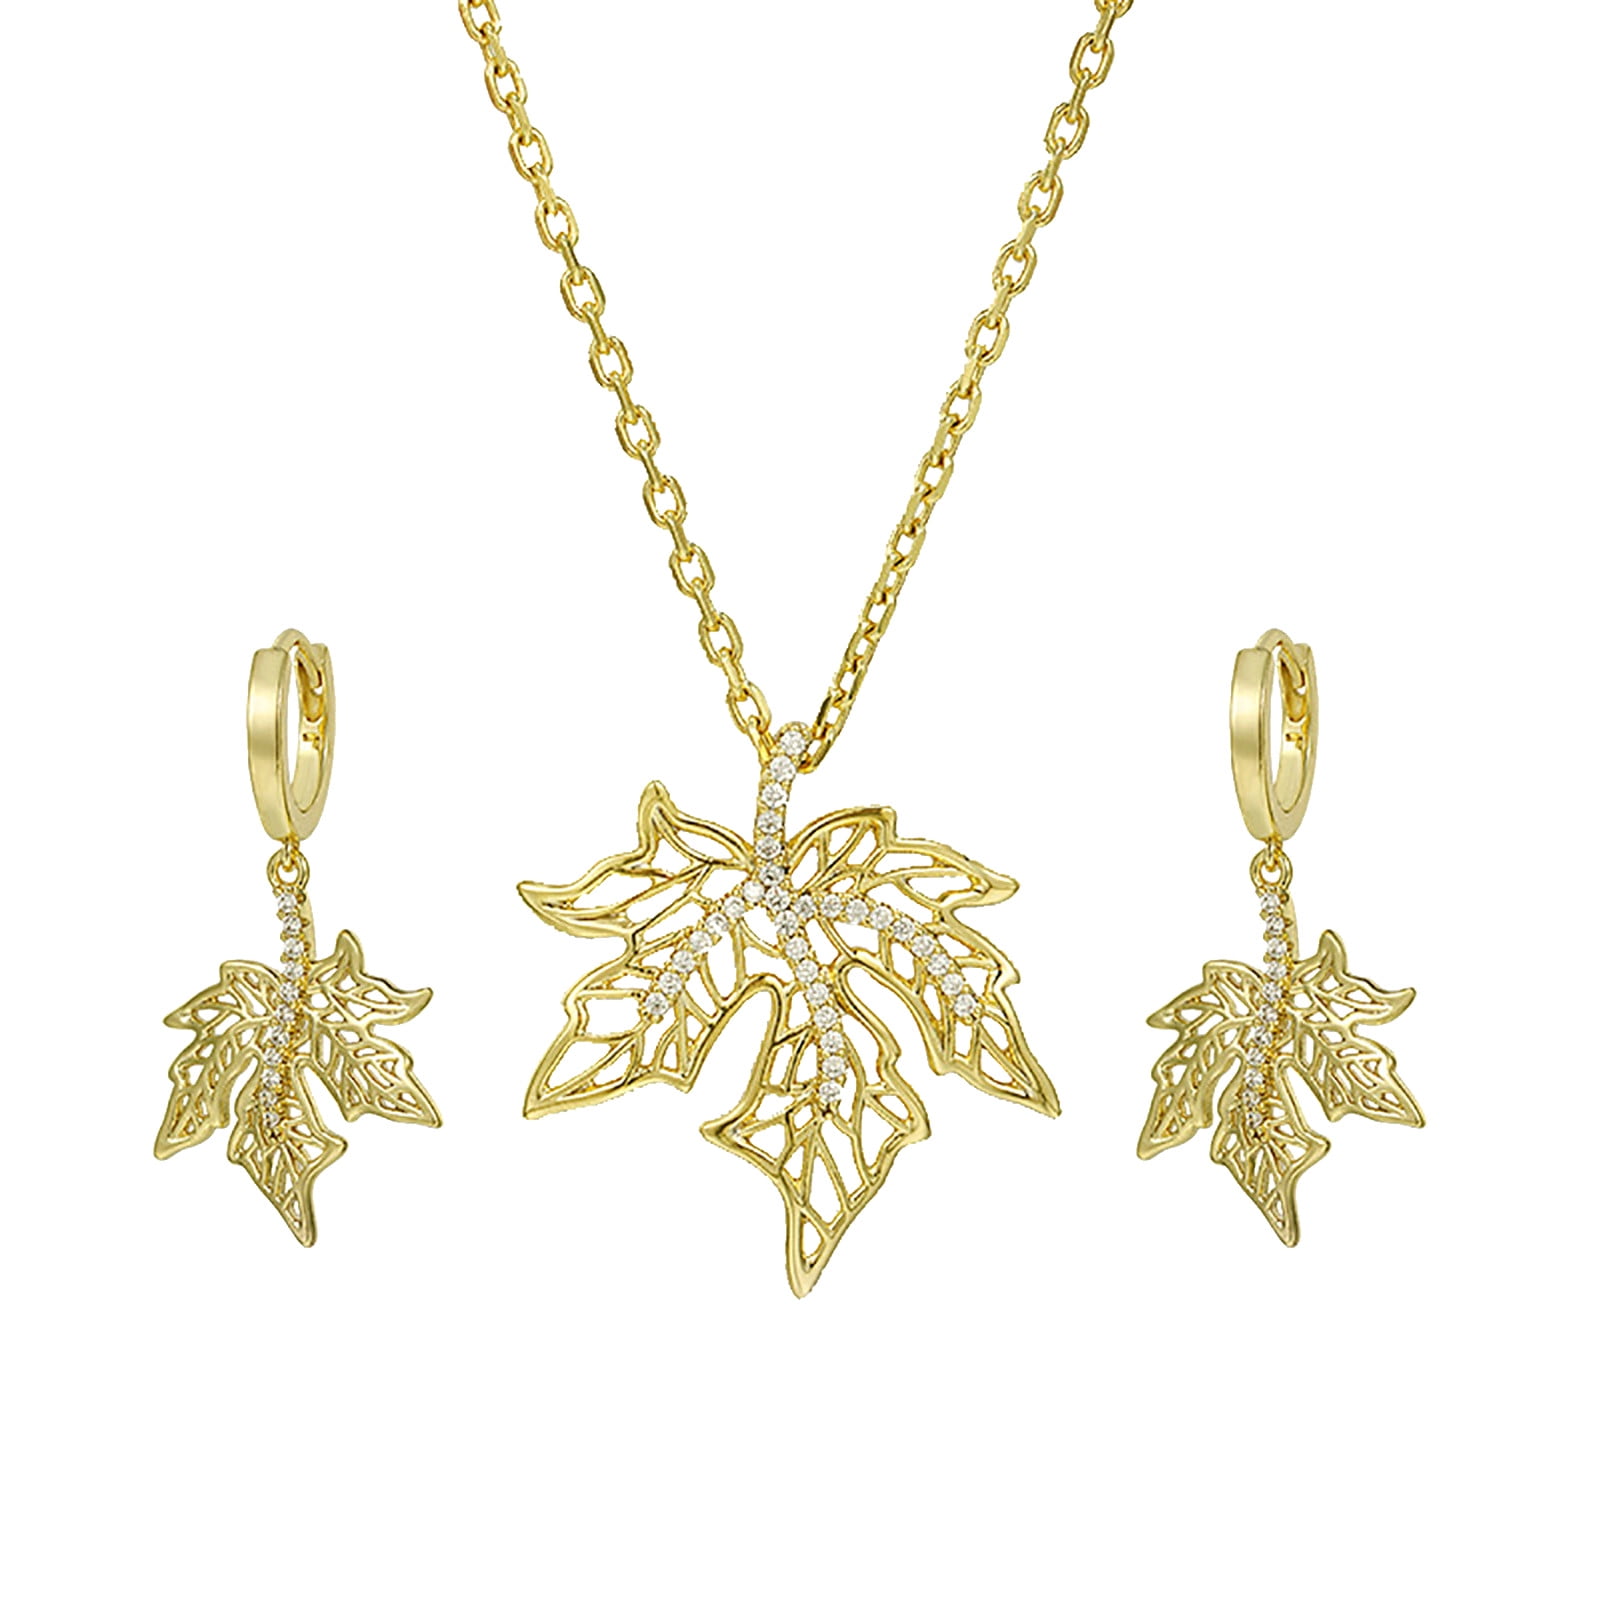 Enchanted Leaves - Large Fallen Copper Maple Leaf Necklace